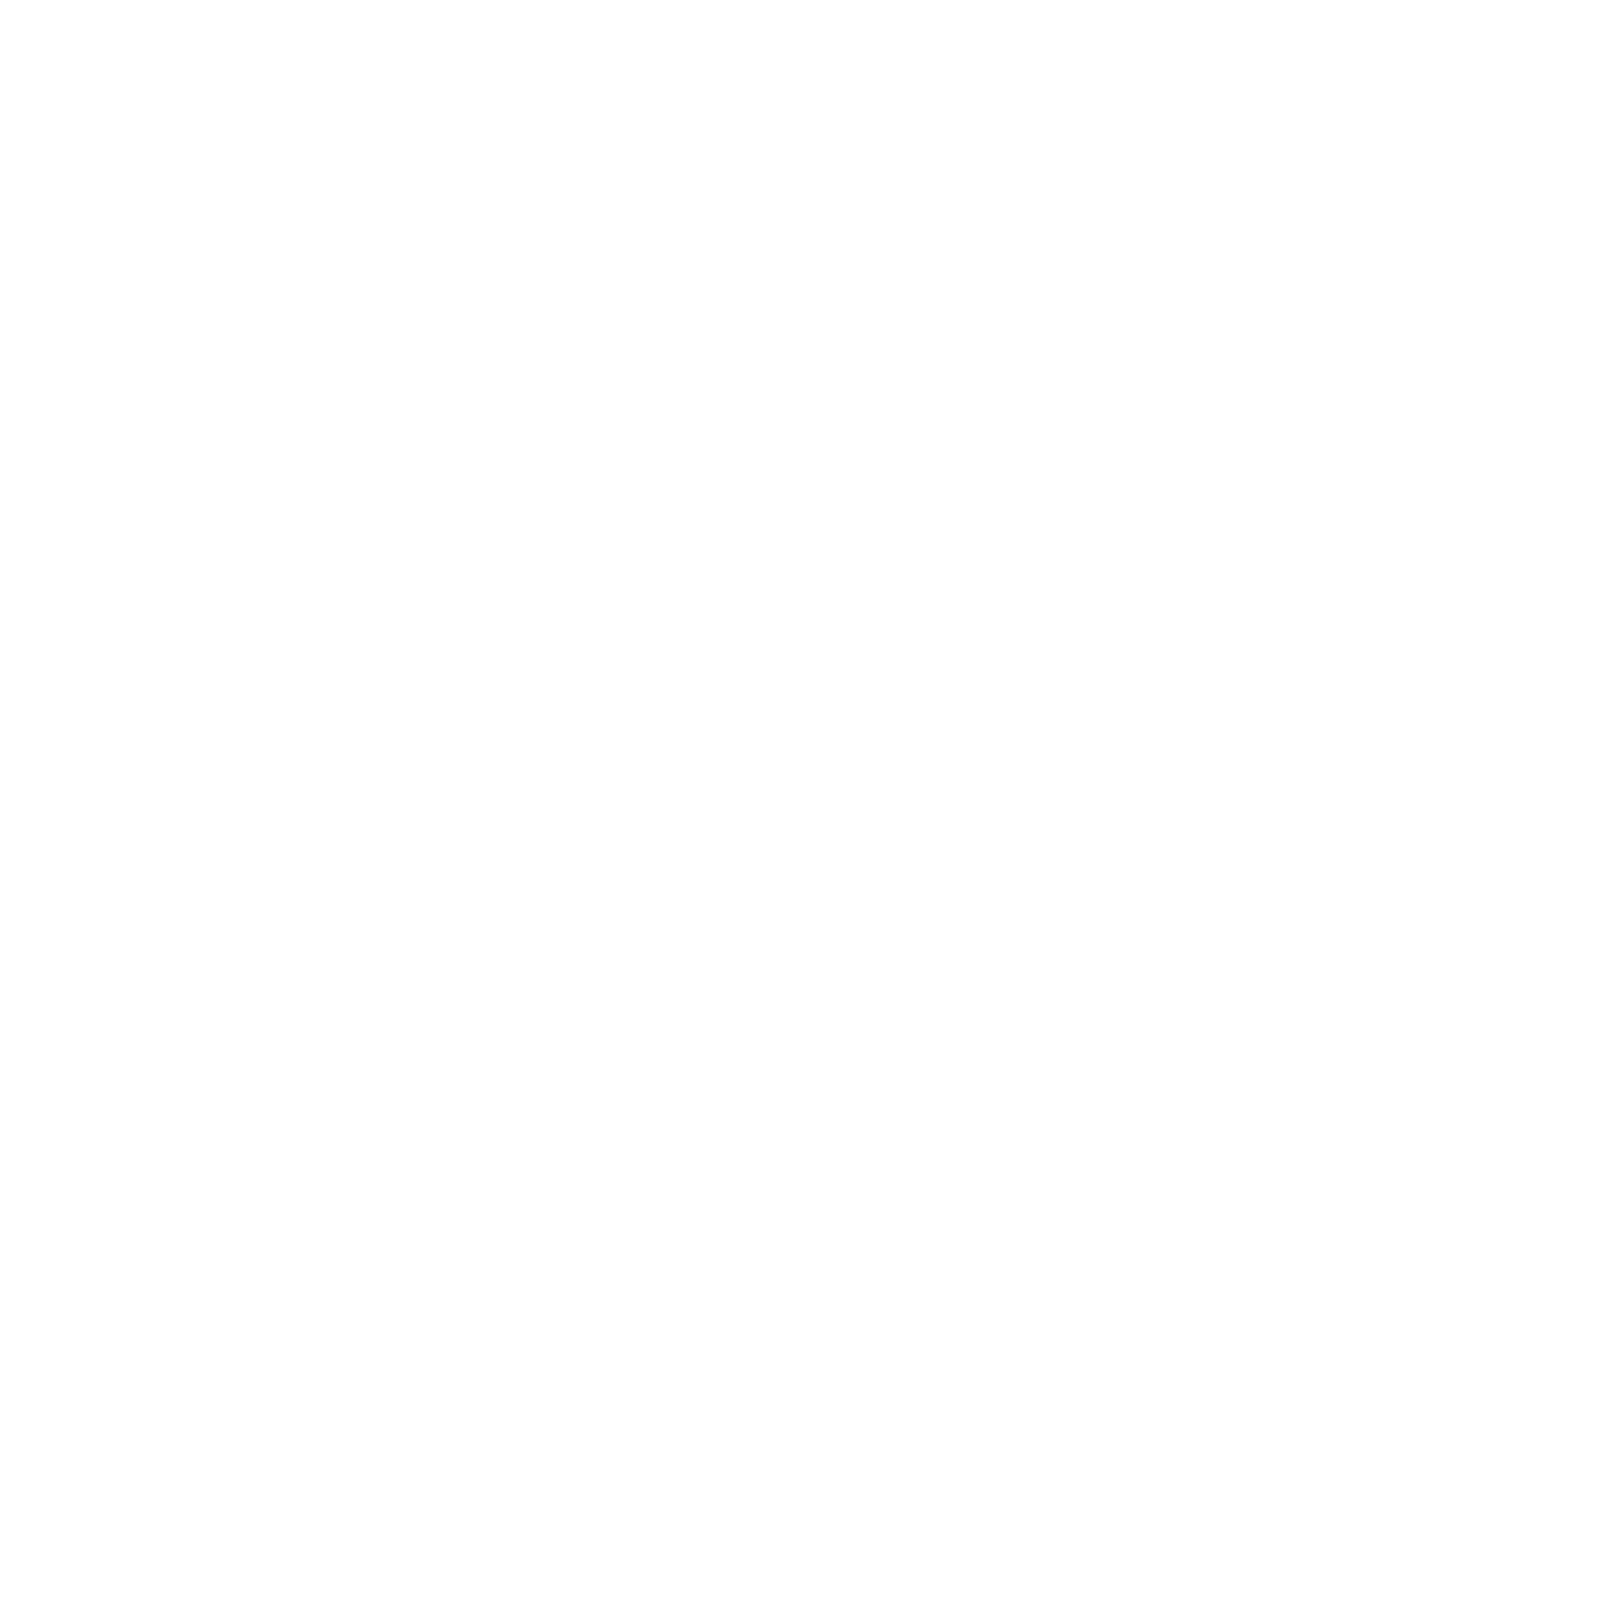 Line App